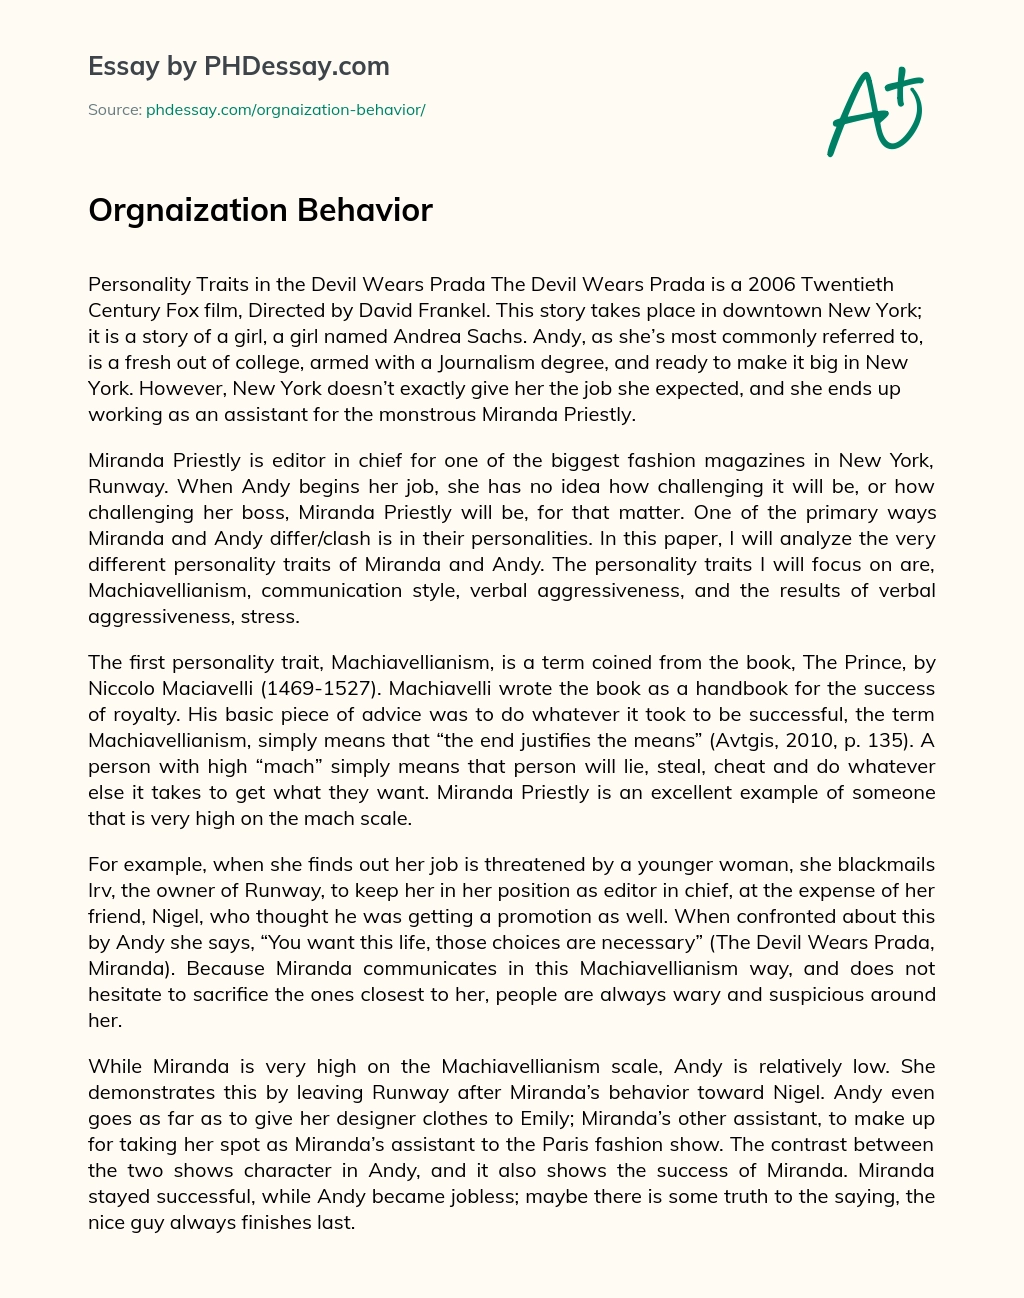 Orgnaization Behavior essay